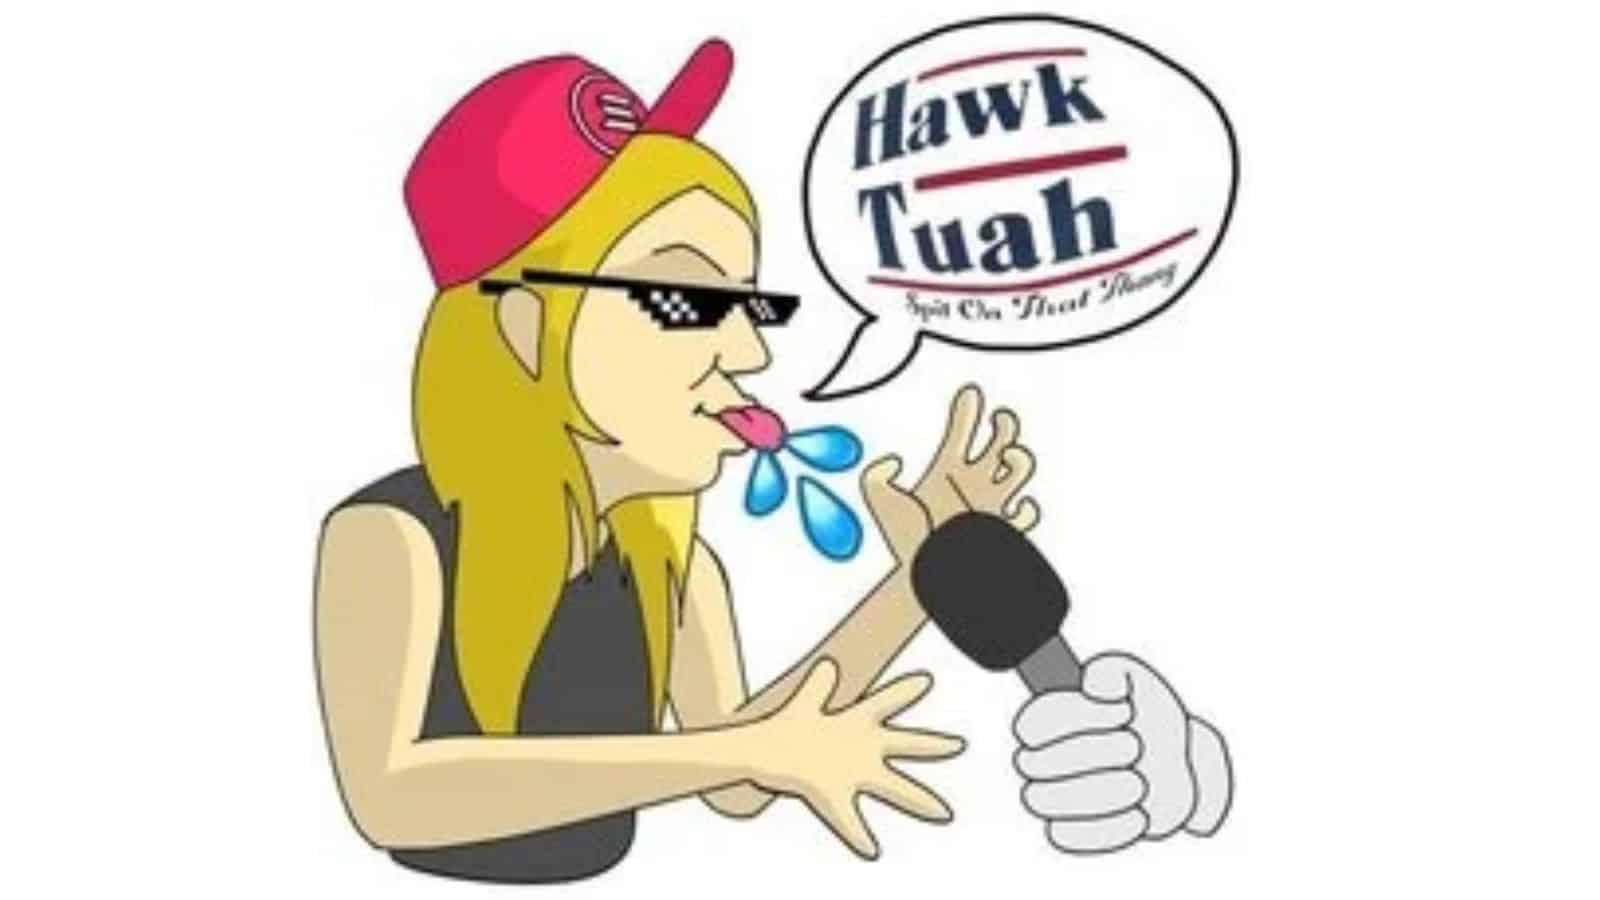 Hawk Tuah price